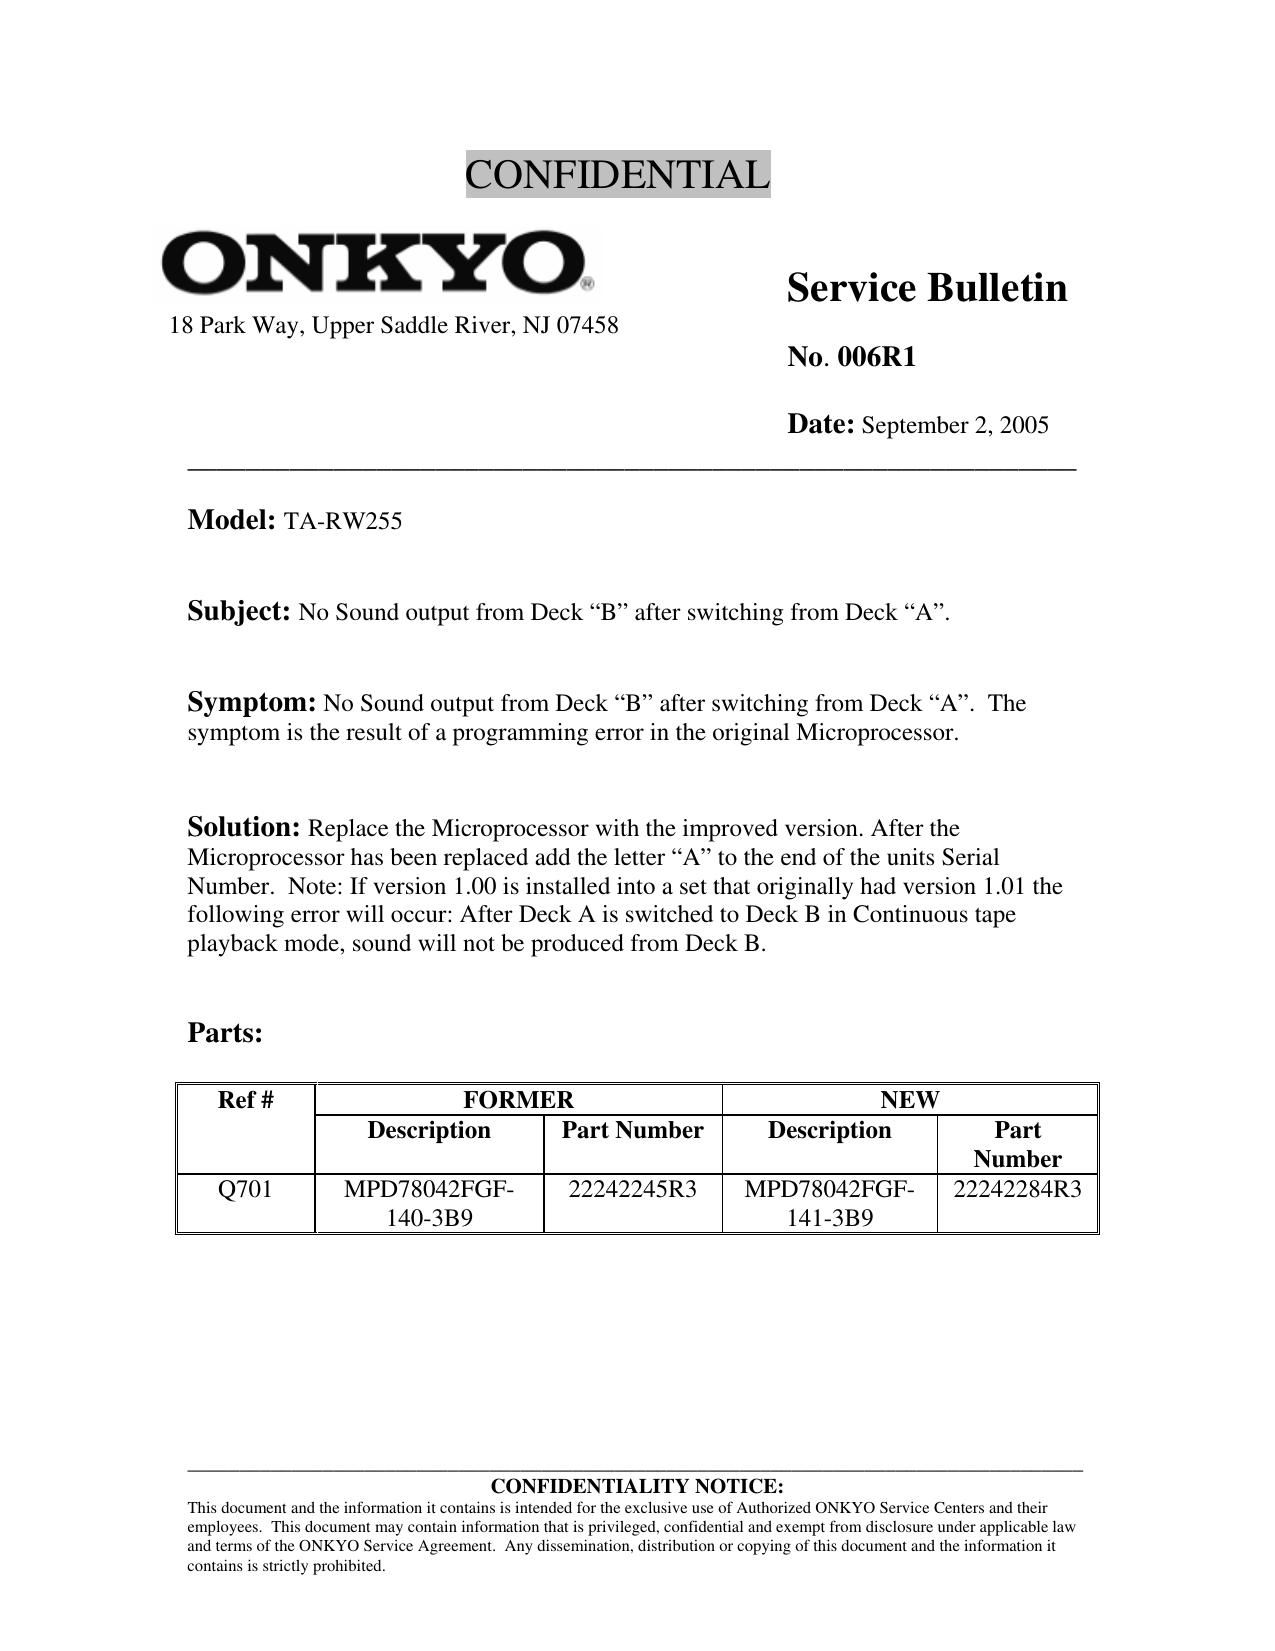 Onkyo TARW 255 Service Bulletin